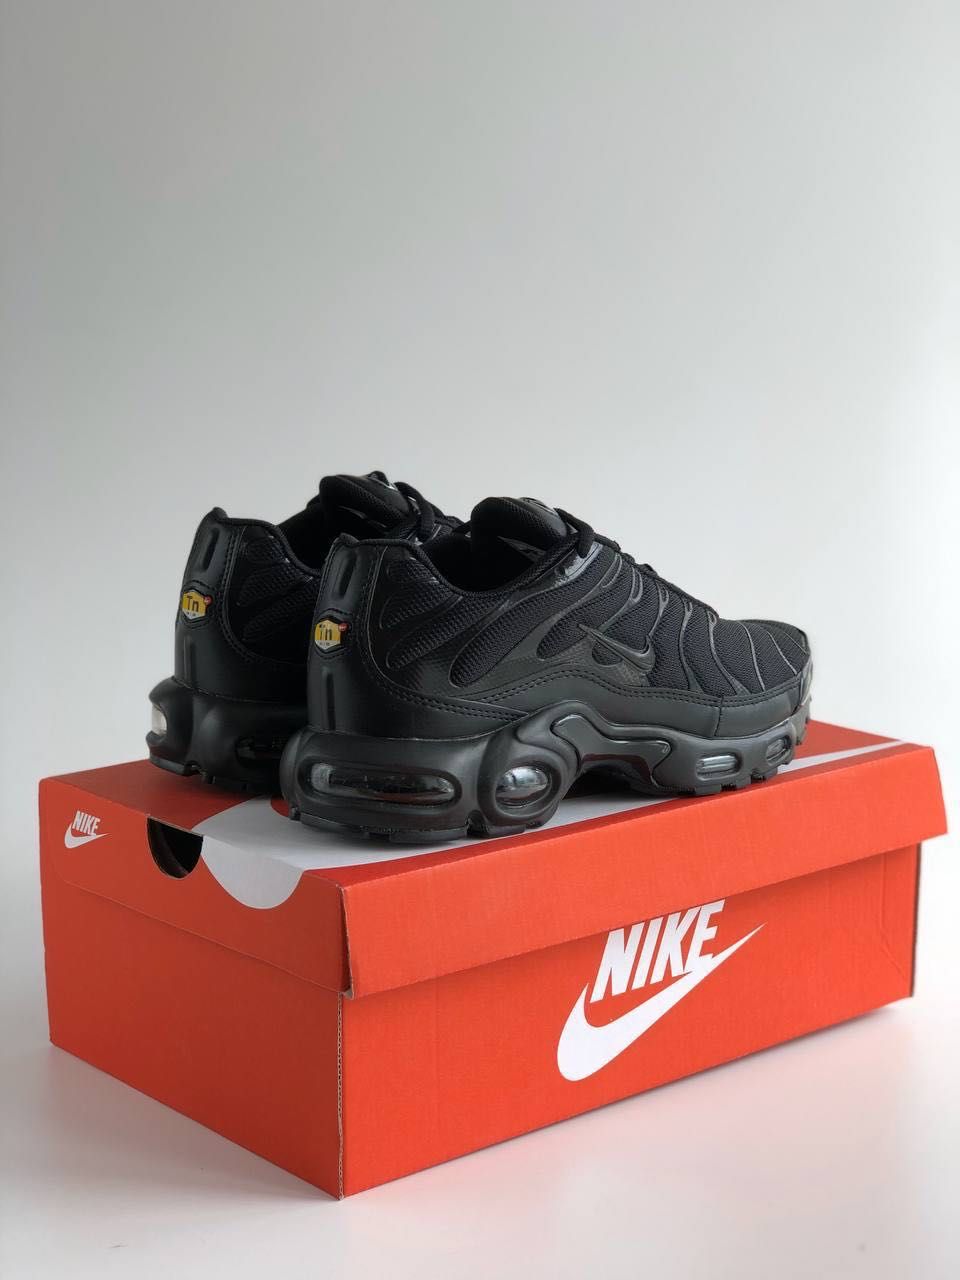 Мужские кроссовки Nike Air Max Tn Plus black. Размеры 39-45